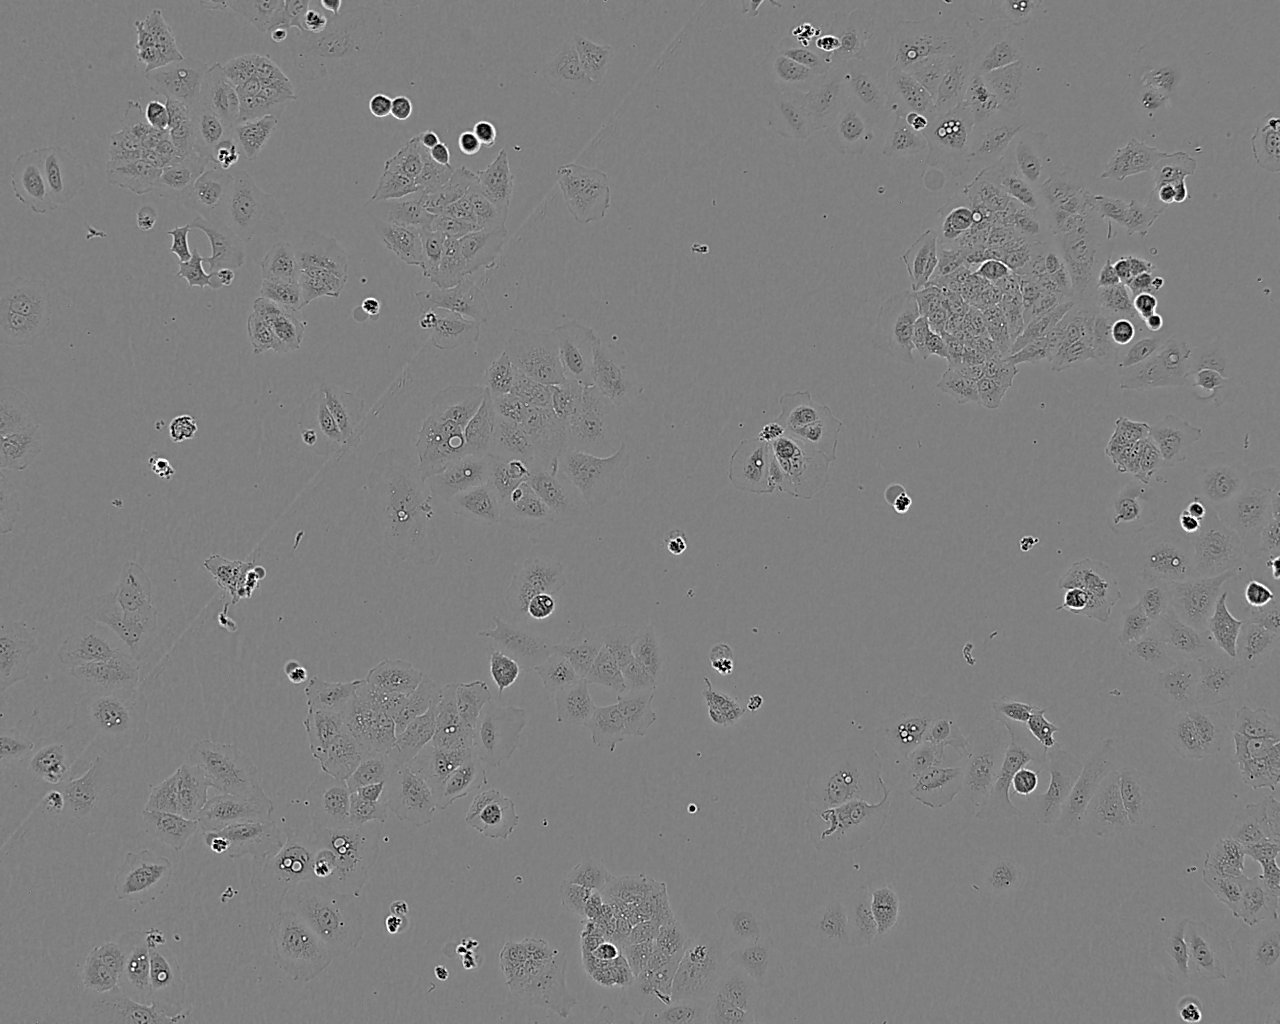 L-132 Cell|人胚胎肺上皮细胞,L-132 Cell